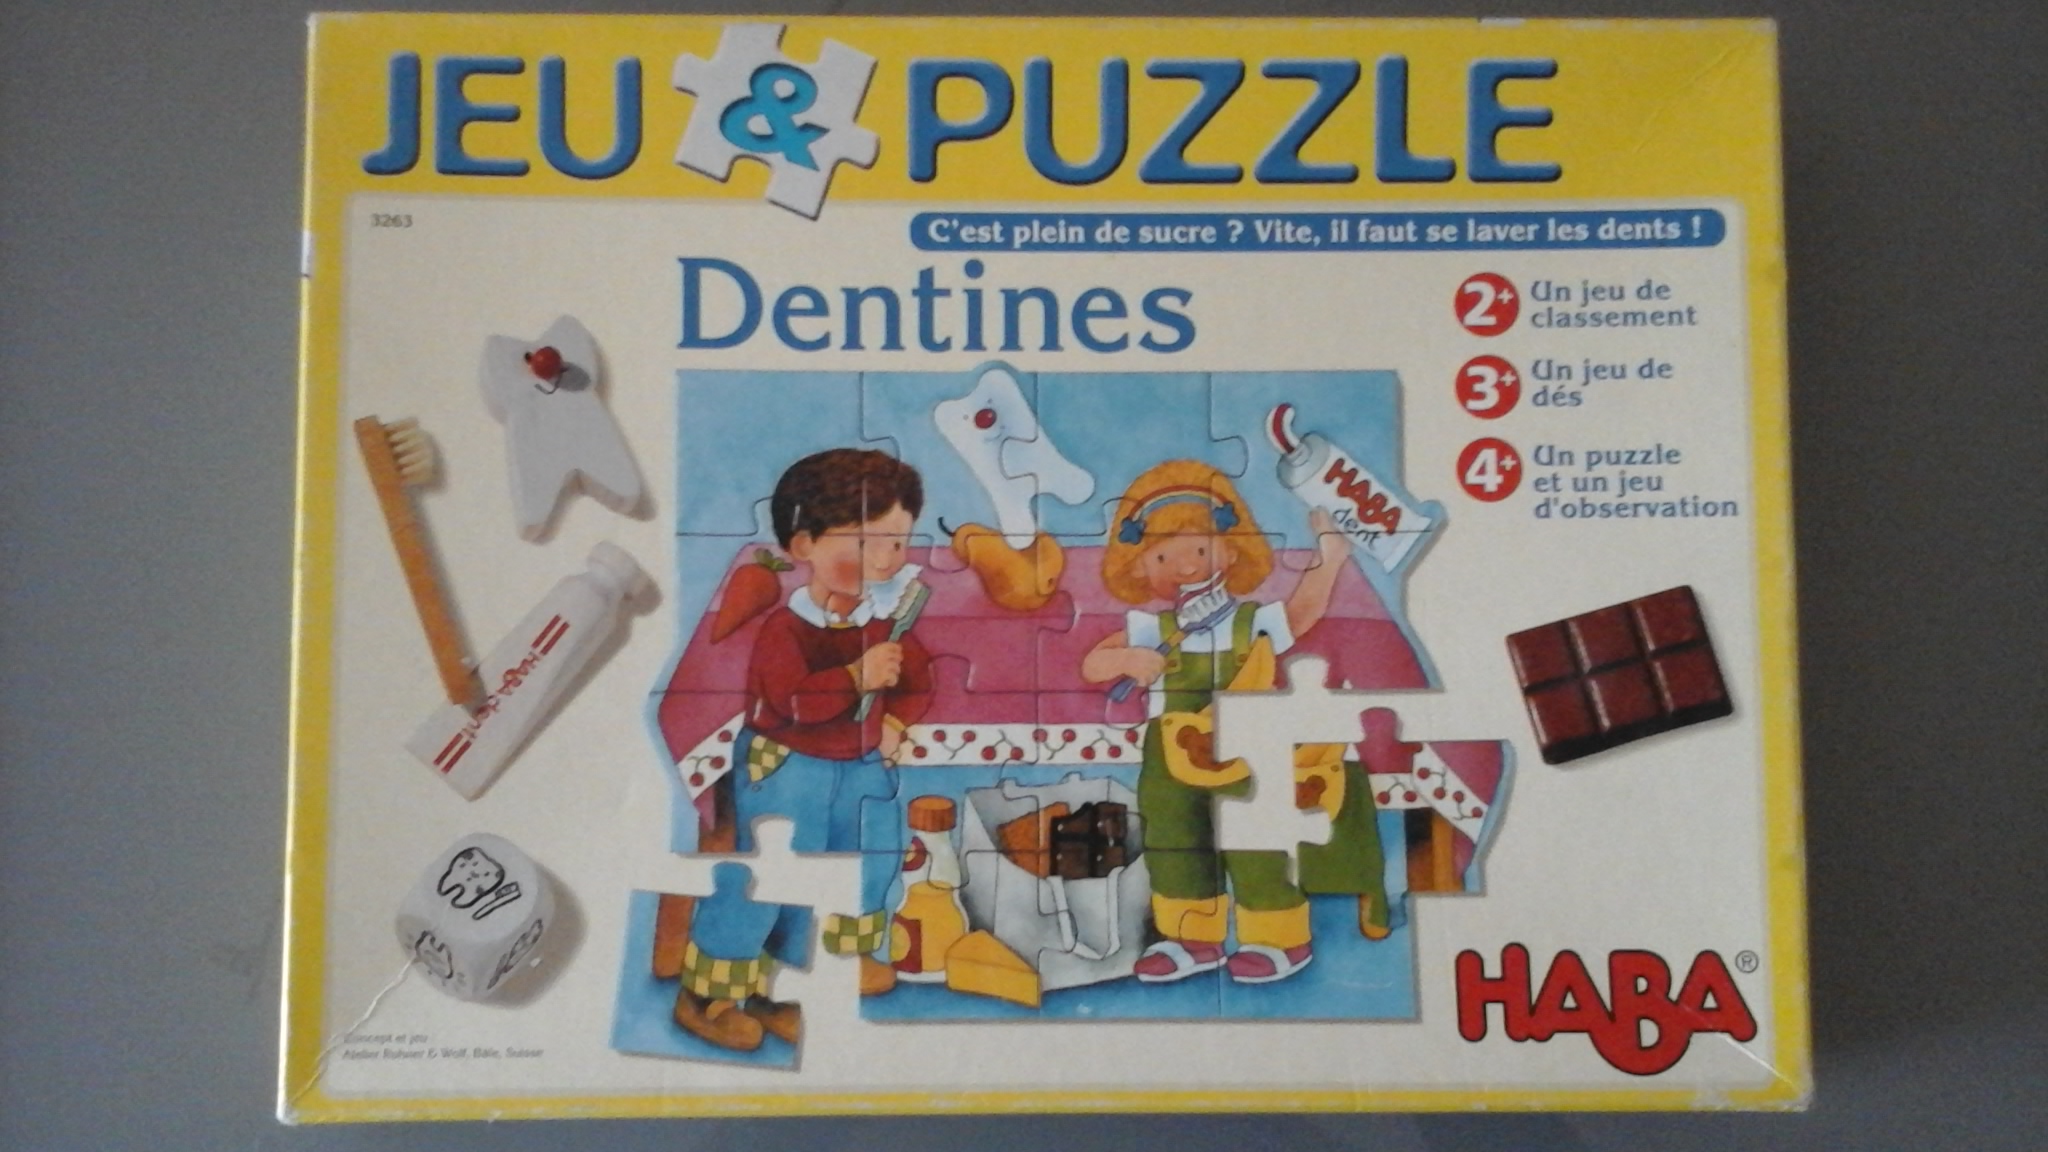 Jeu & Puzzle - Dentines